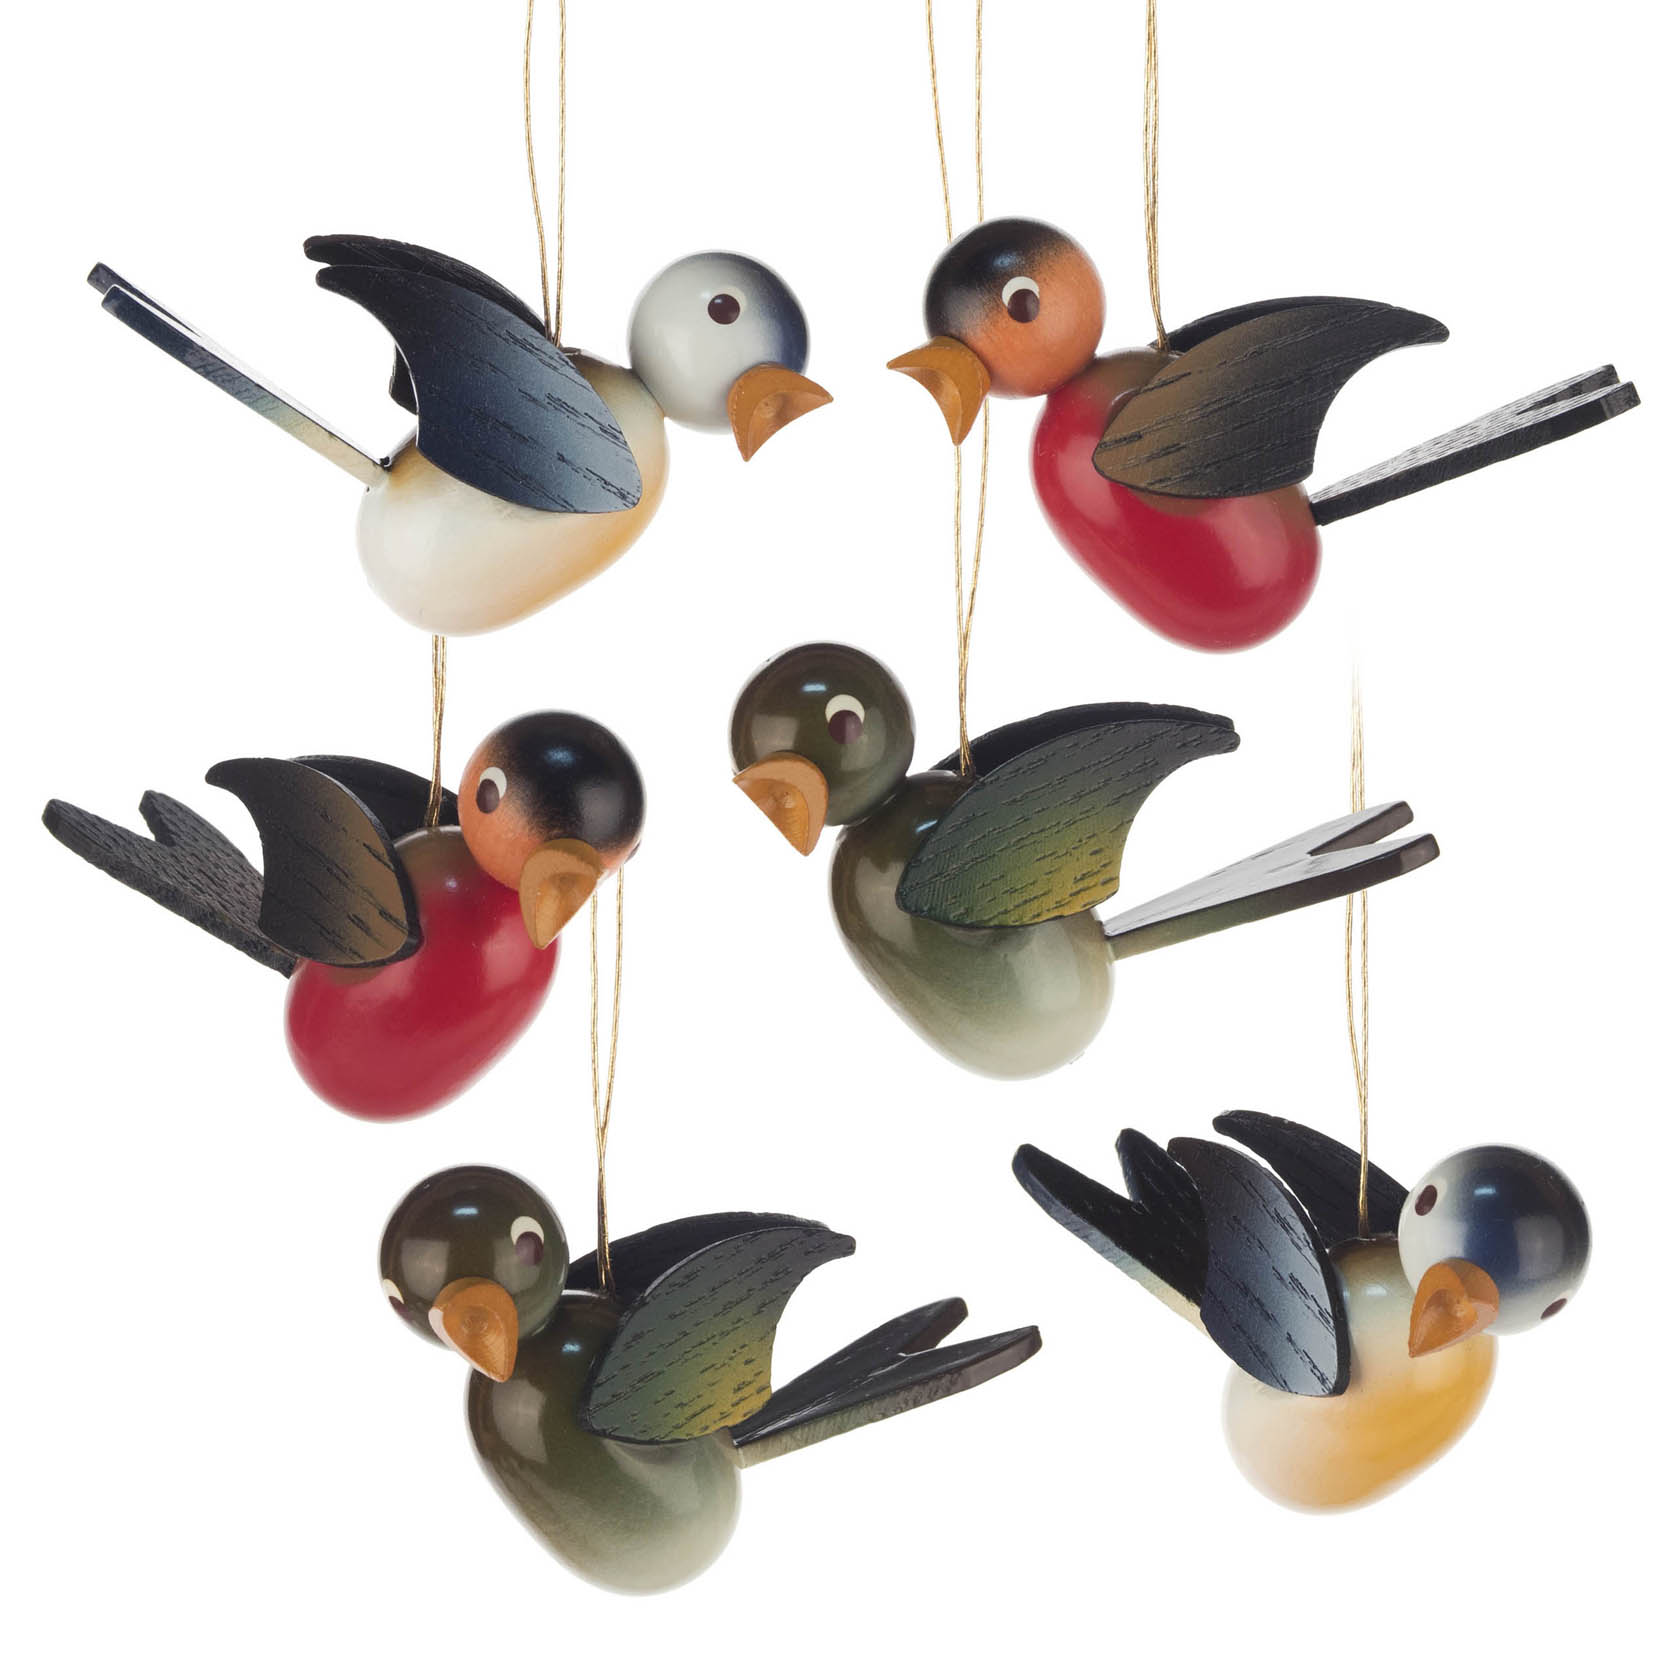 Behang Vögel farbig (6) im Dregeno Online Shop günstig kaufen